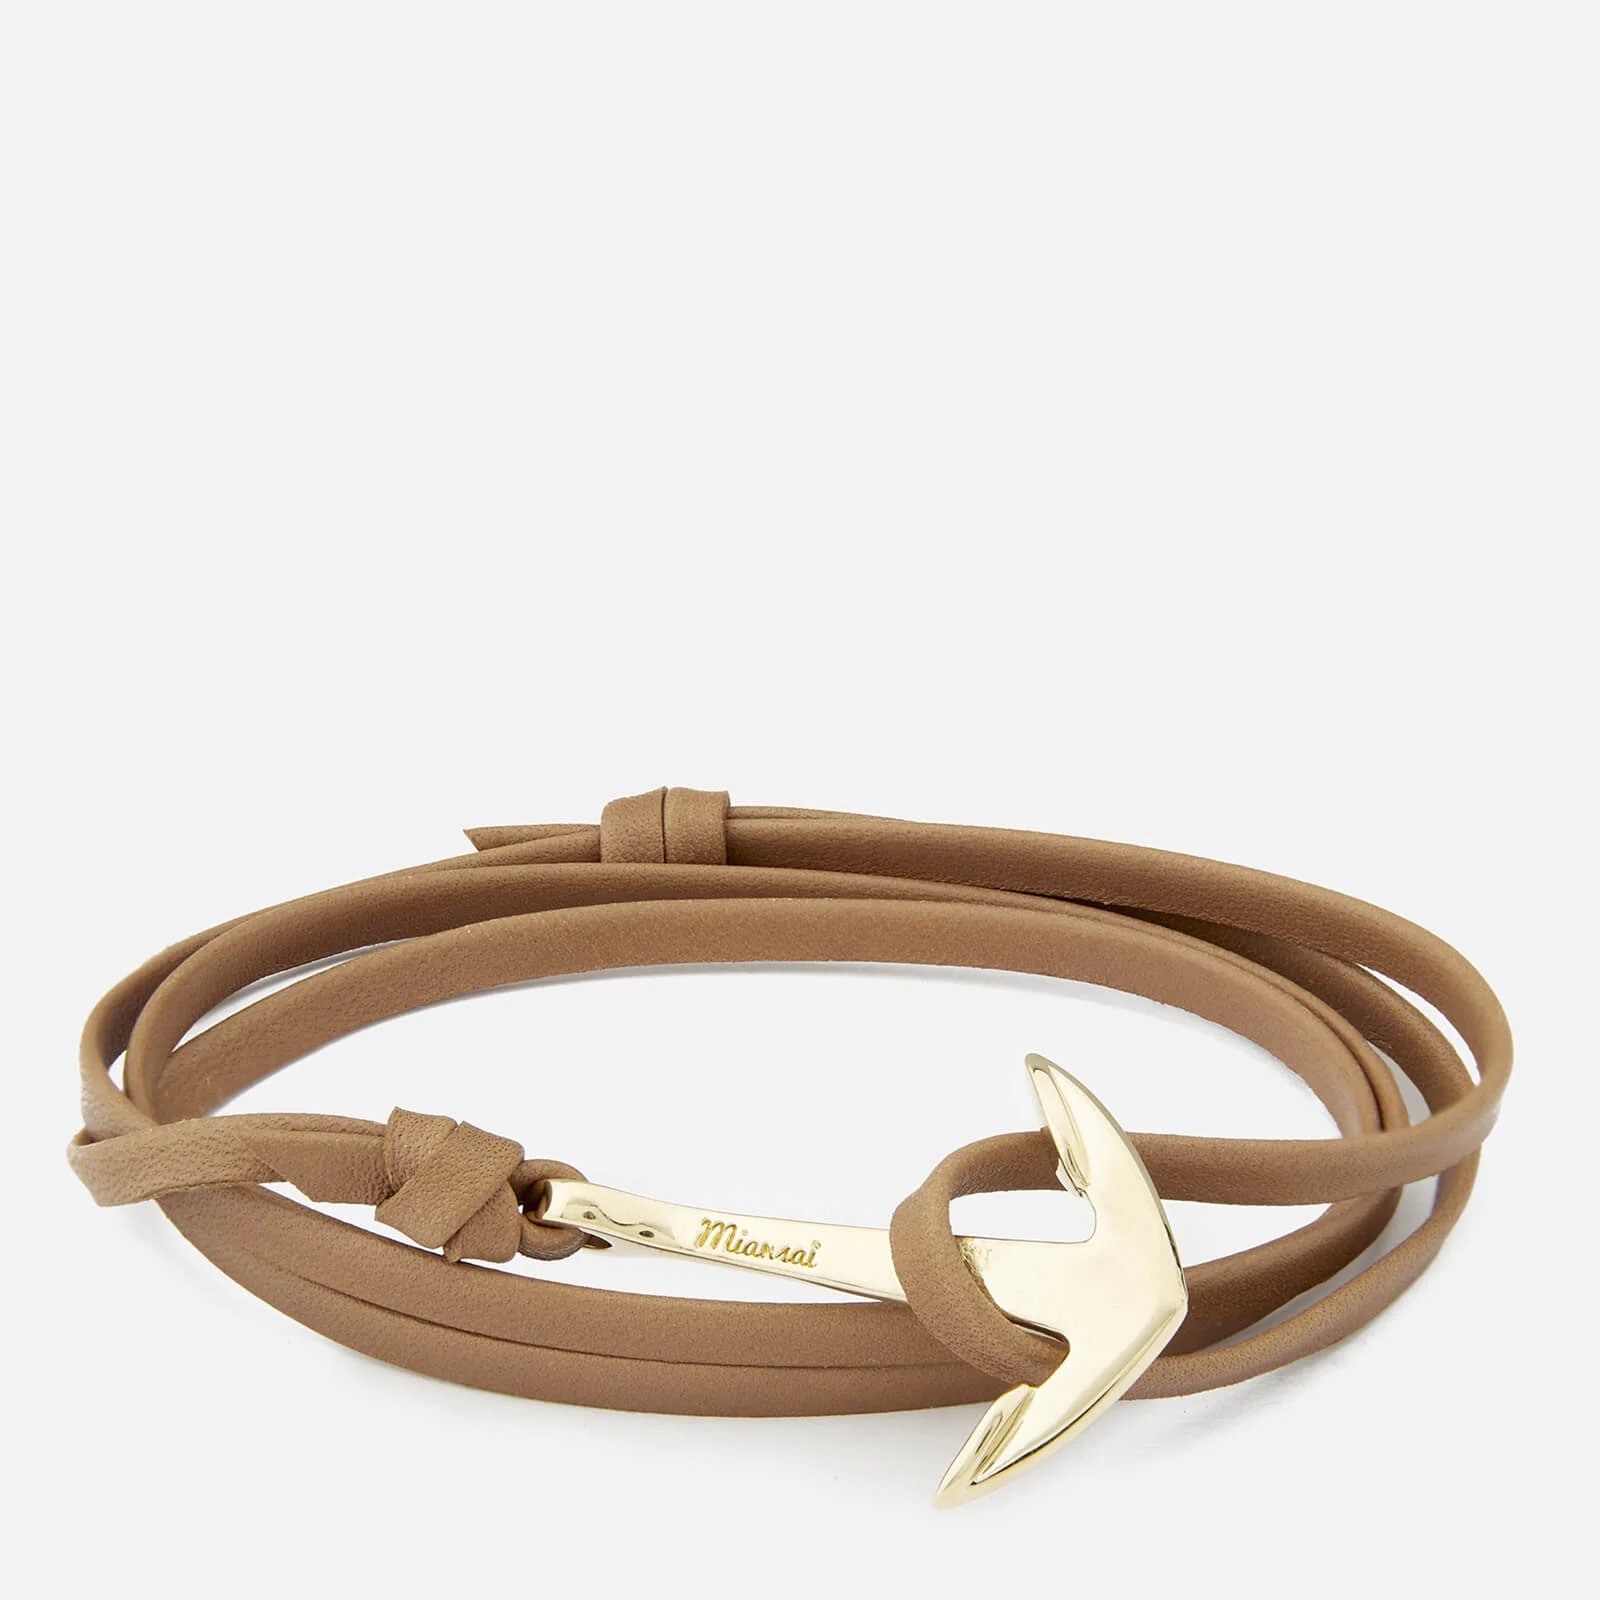 Miansai Men's Leather Bracelet with Gold Anchor - Brown Image 1